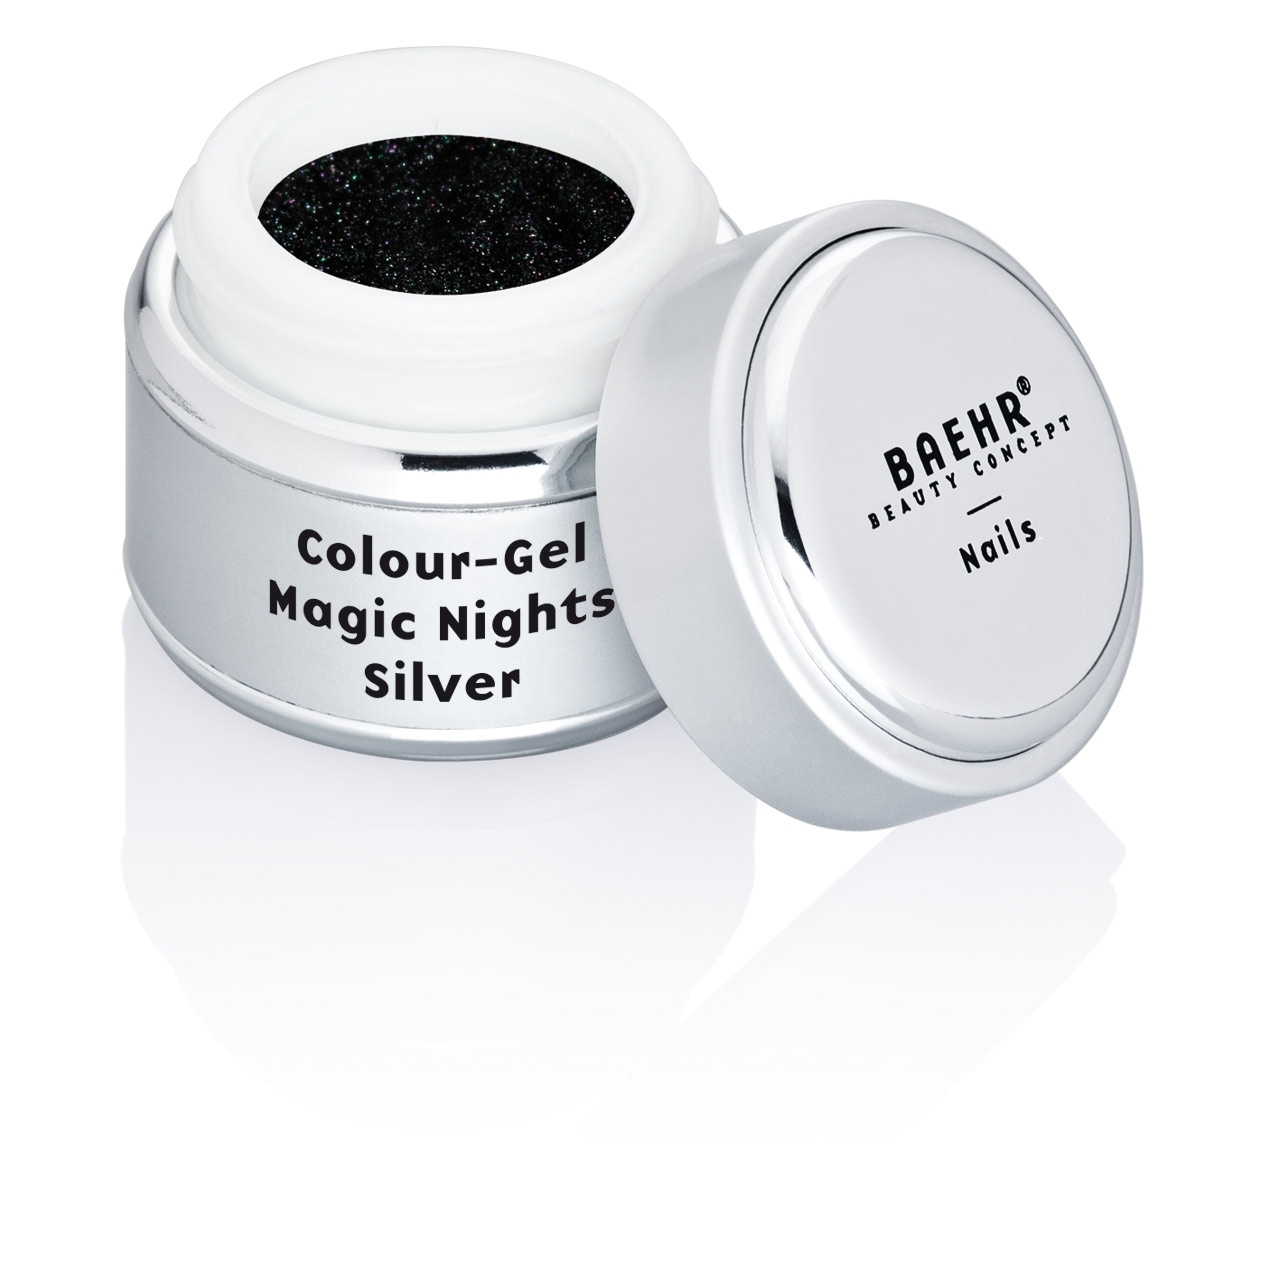 BAEHR BEAUTY CONCEPT - NAILS Colour-Gel Magic Nights Silver 5 ml